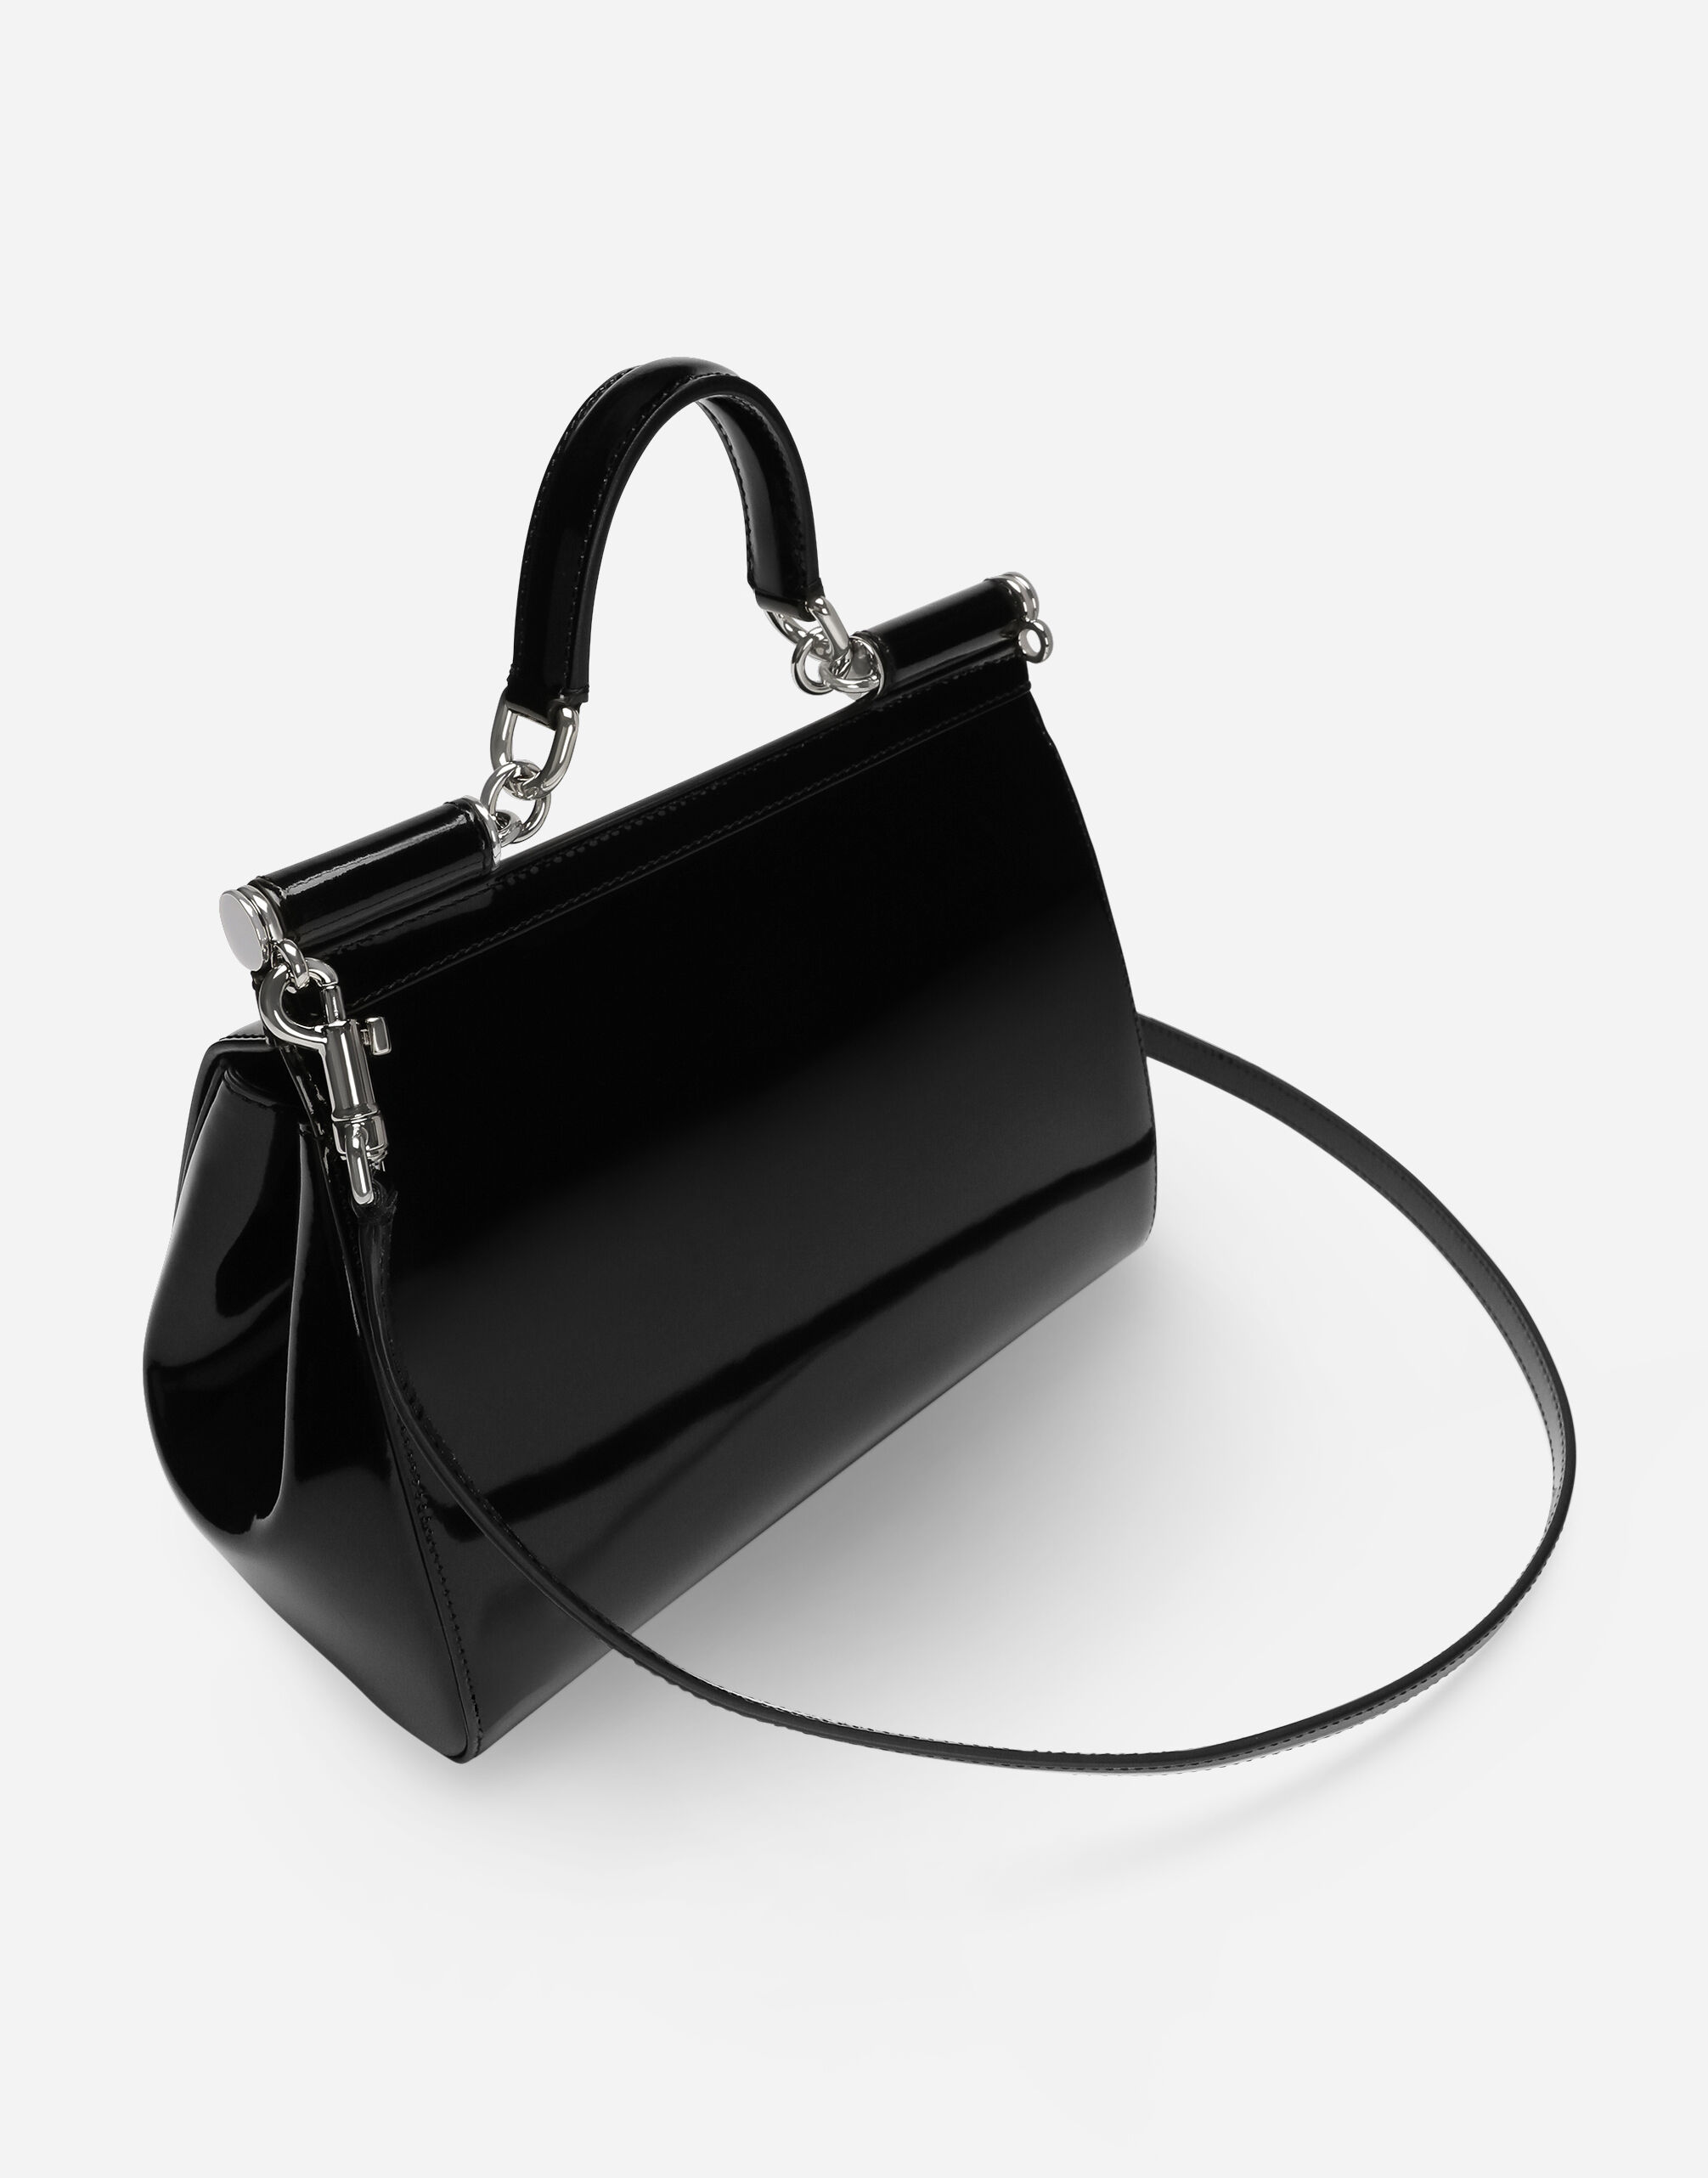 DOLCE GABBANA | Bags, Shoulder bag, Women handbags